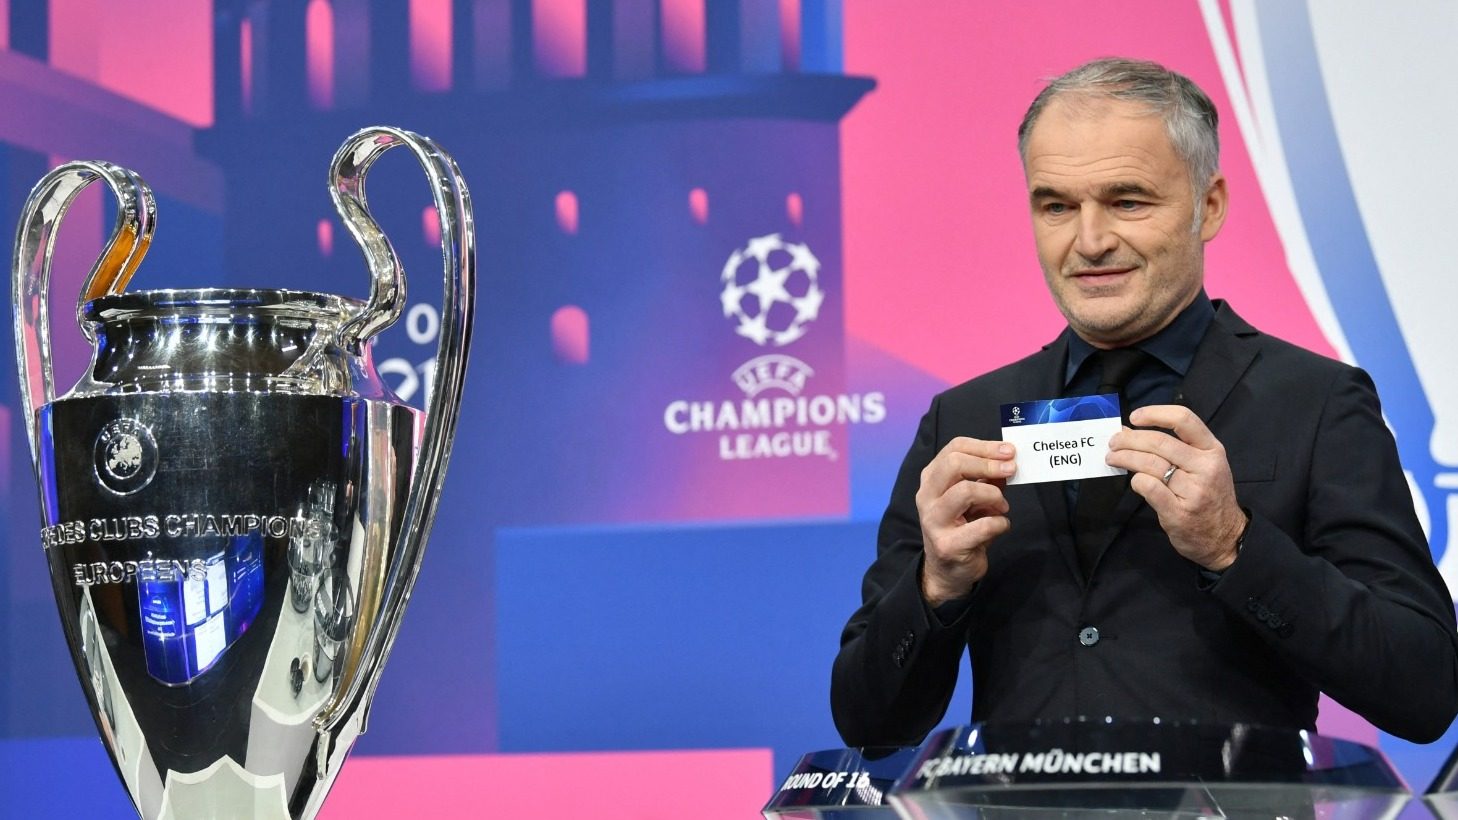 Champions league draw 2021/22